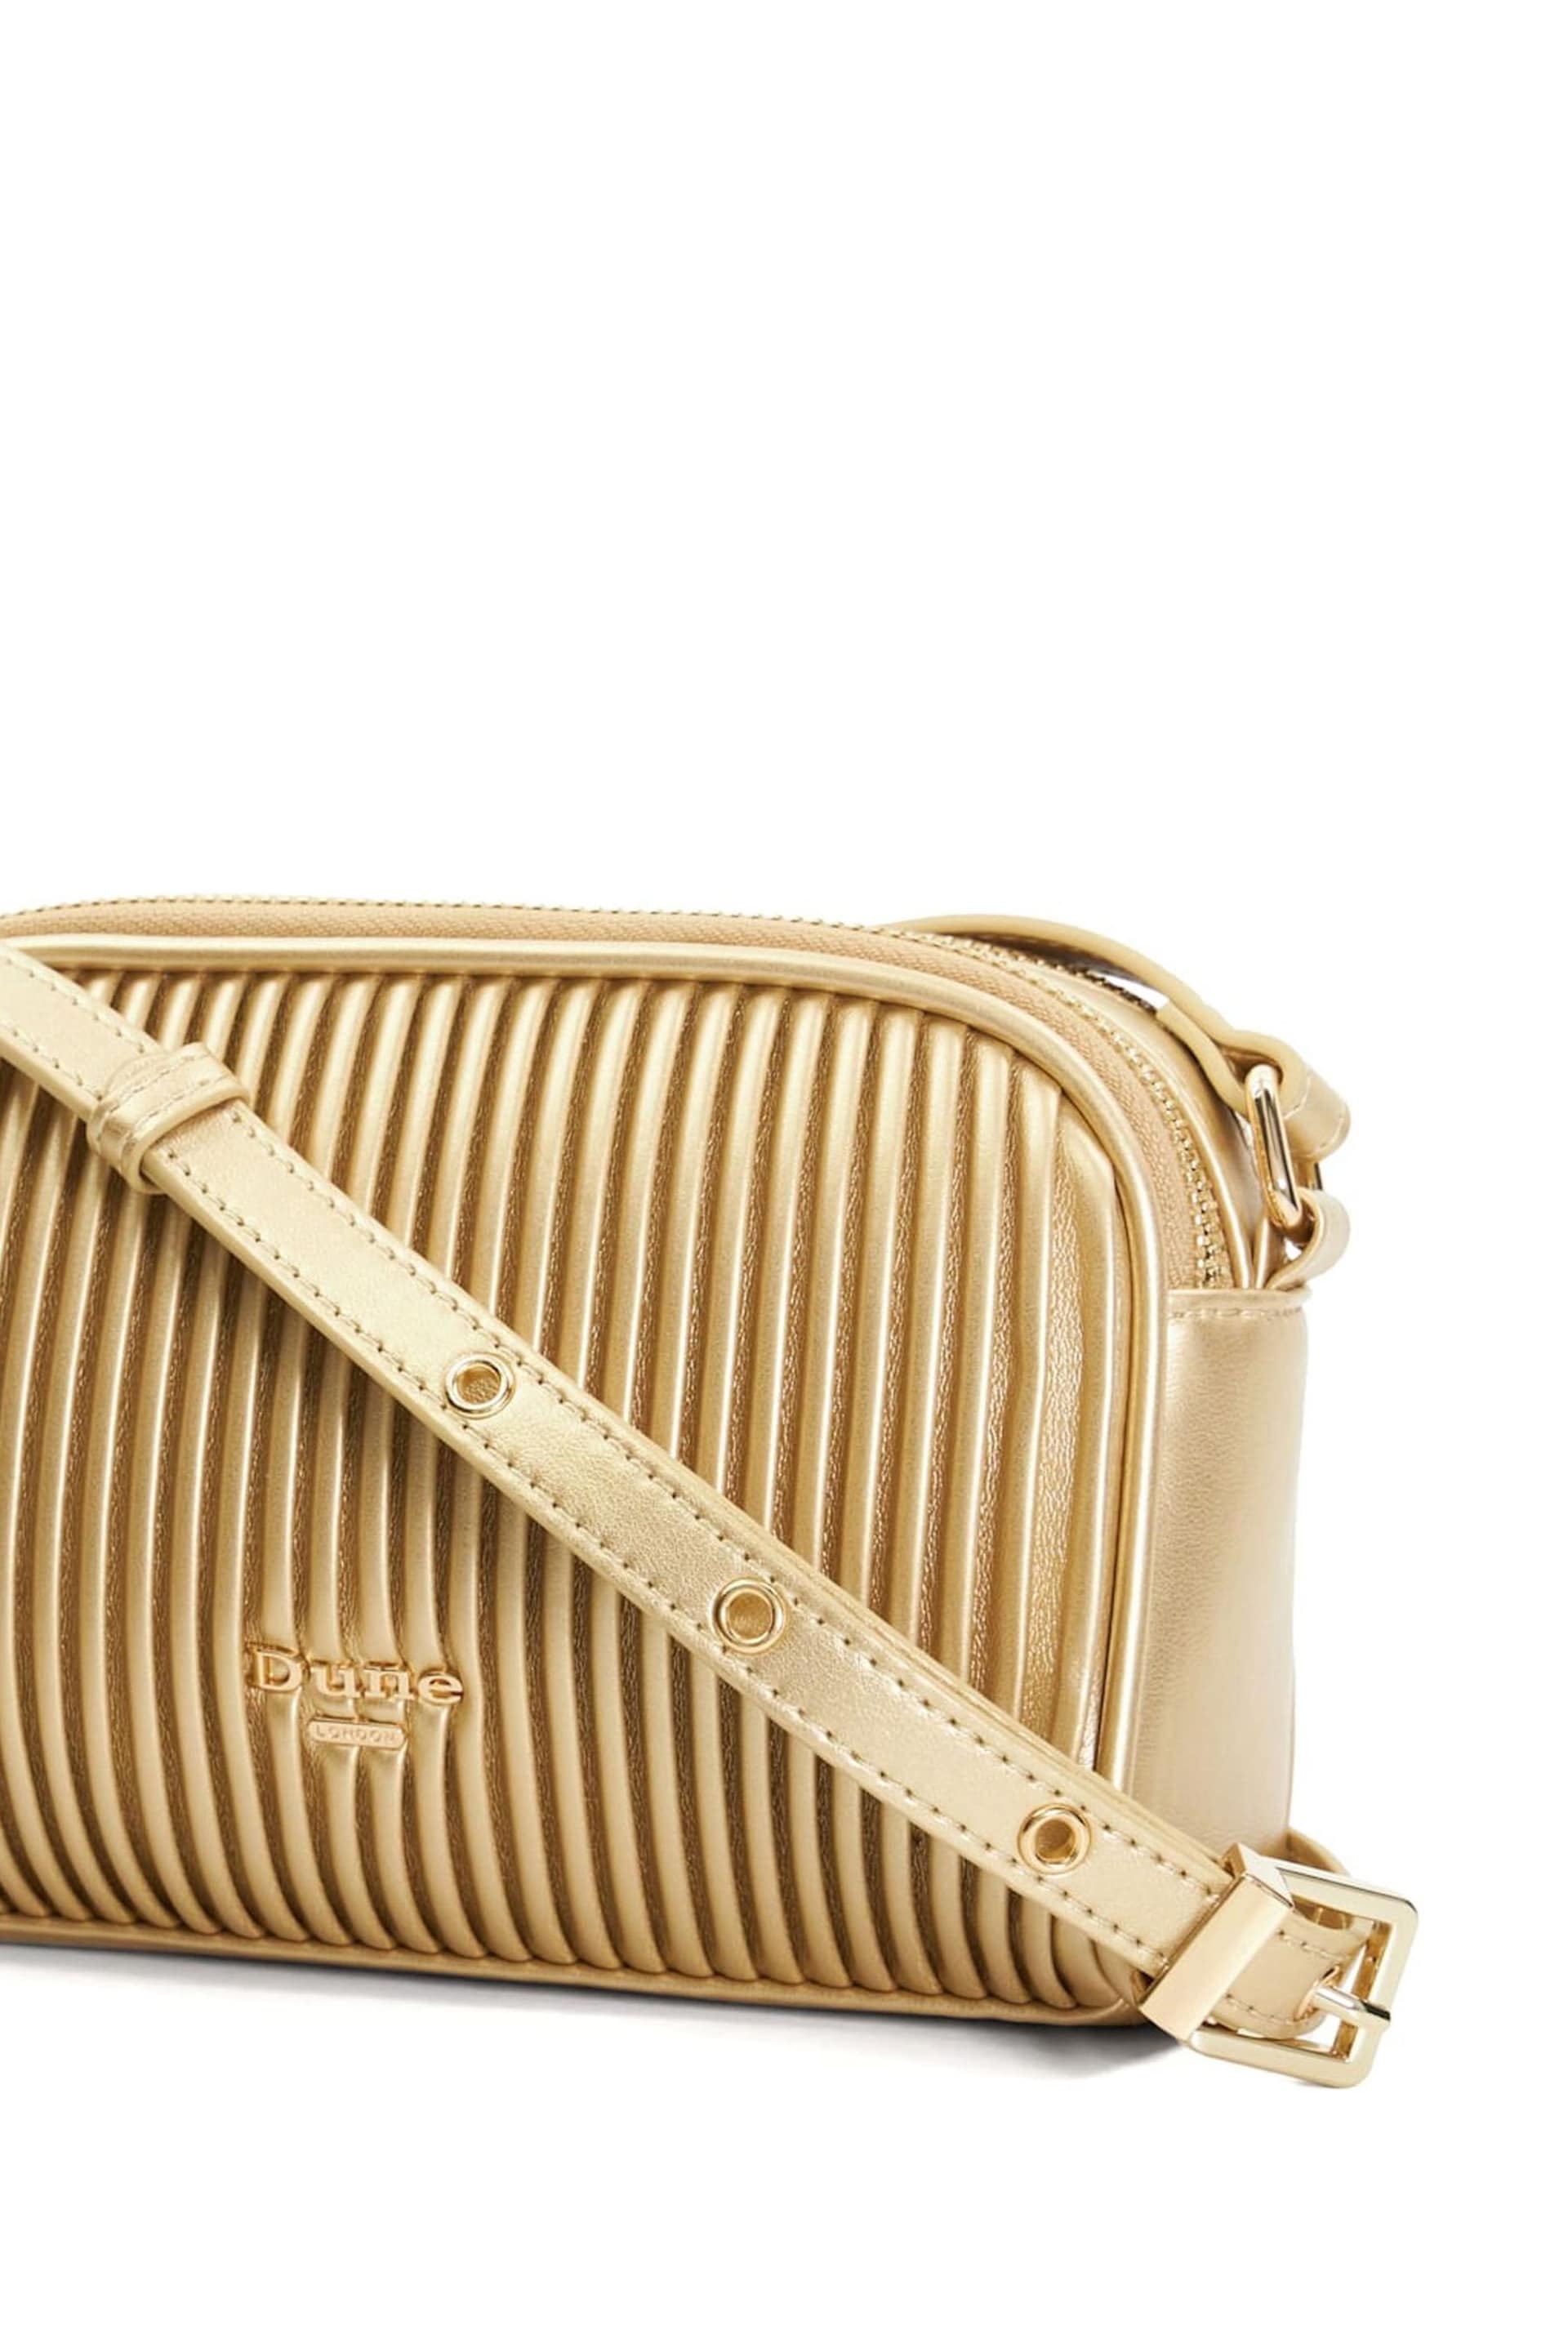 Dune London Gold Detail Pleat Cross-Body Mini Bag - Image 6 of 6